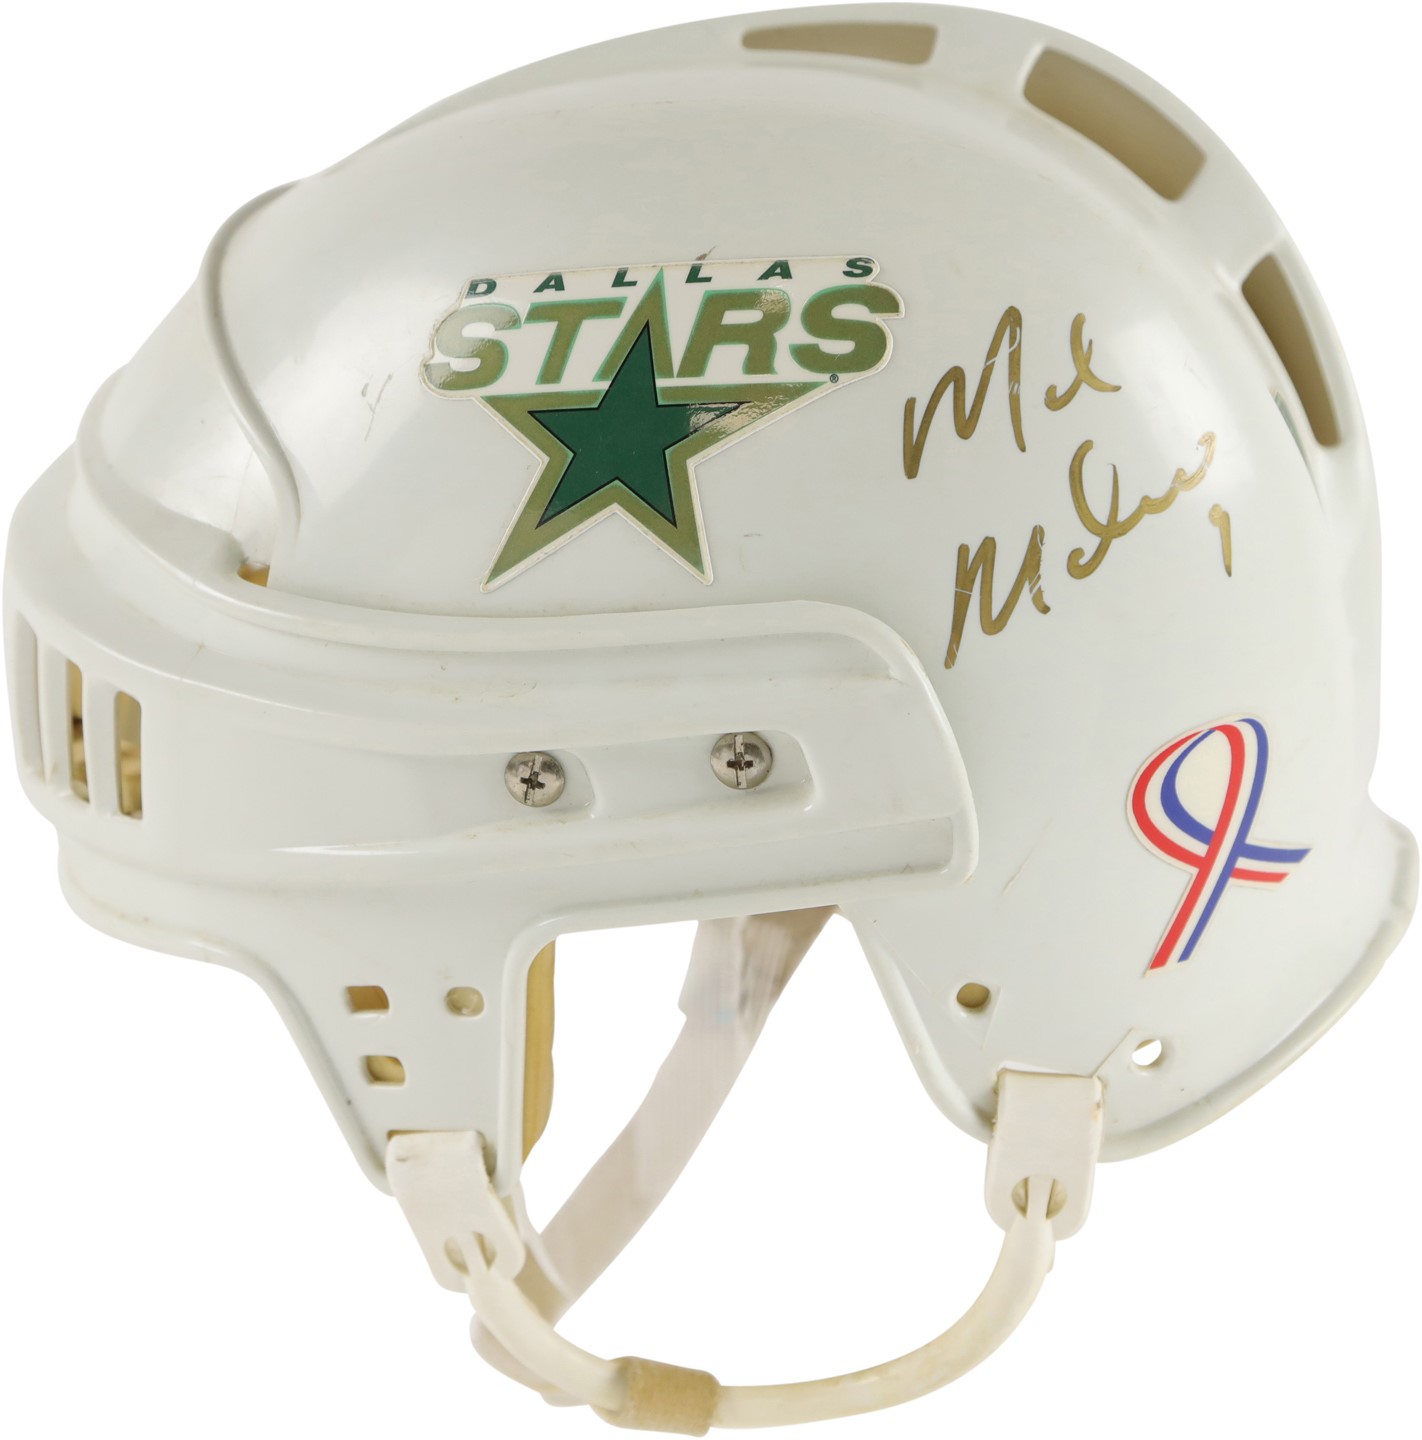 - 1998-99 Mike Modano Dallas Stars Signed Game Worn Helmet - Stanley Cup Championship Season